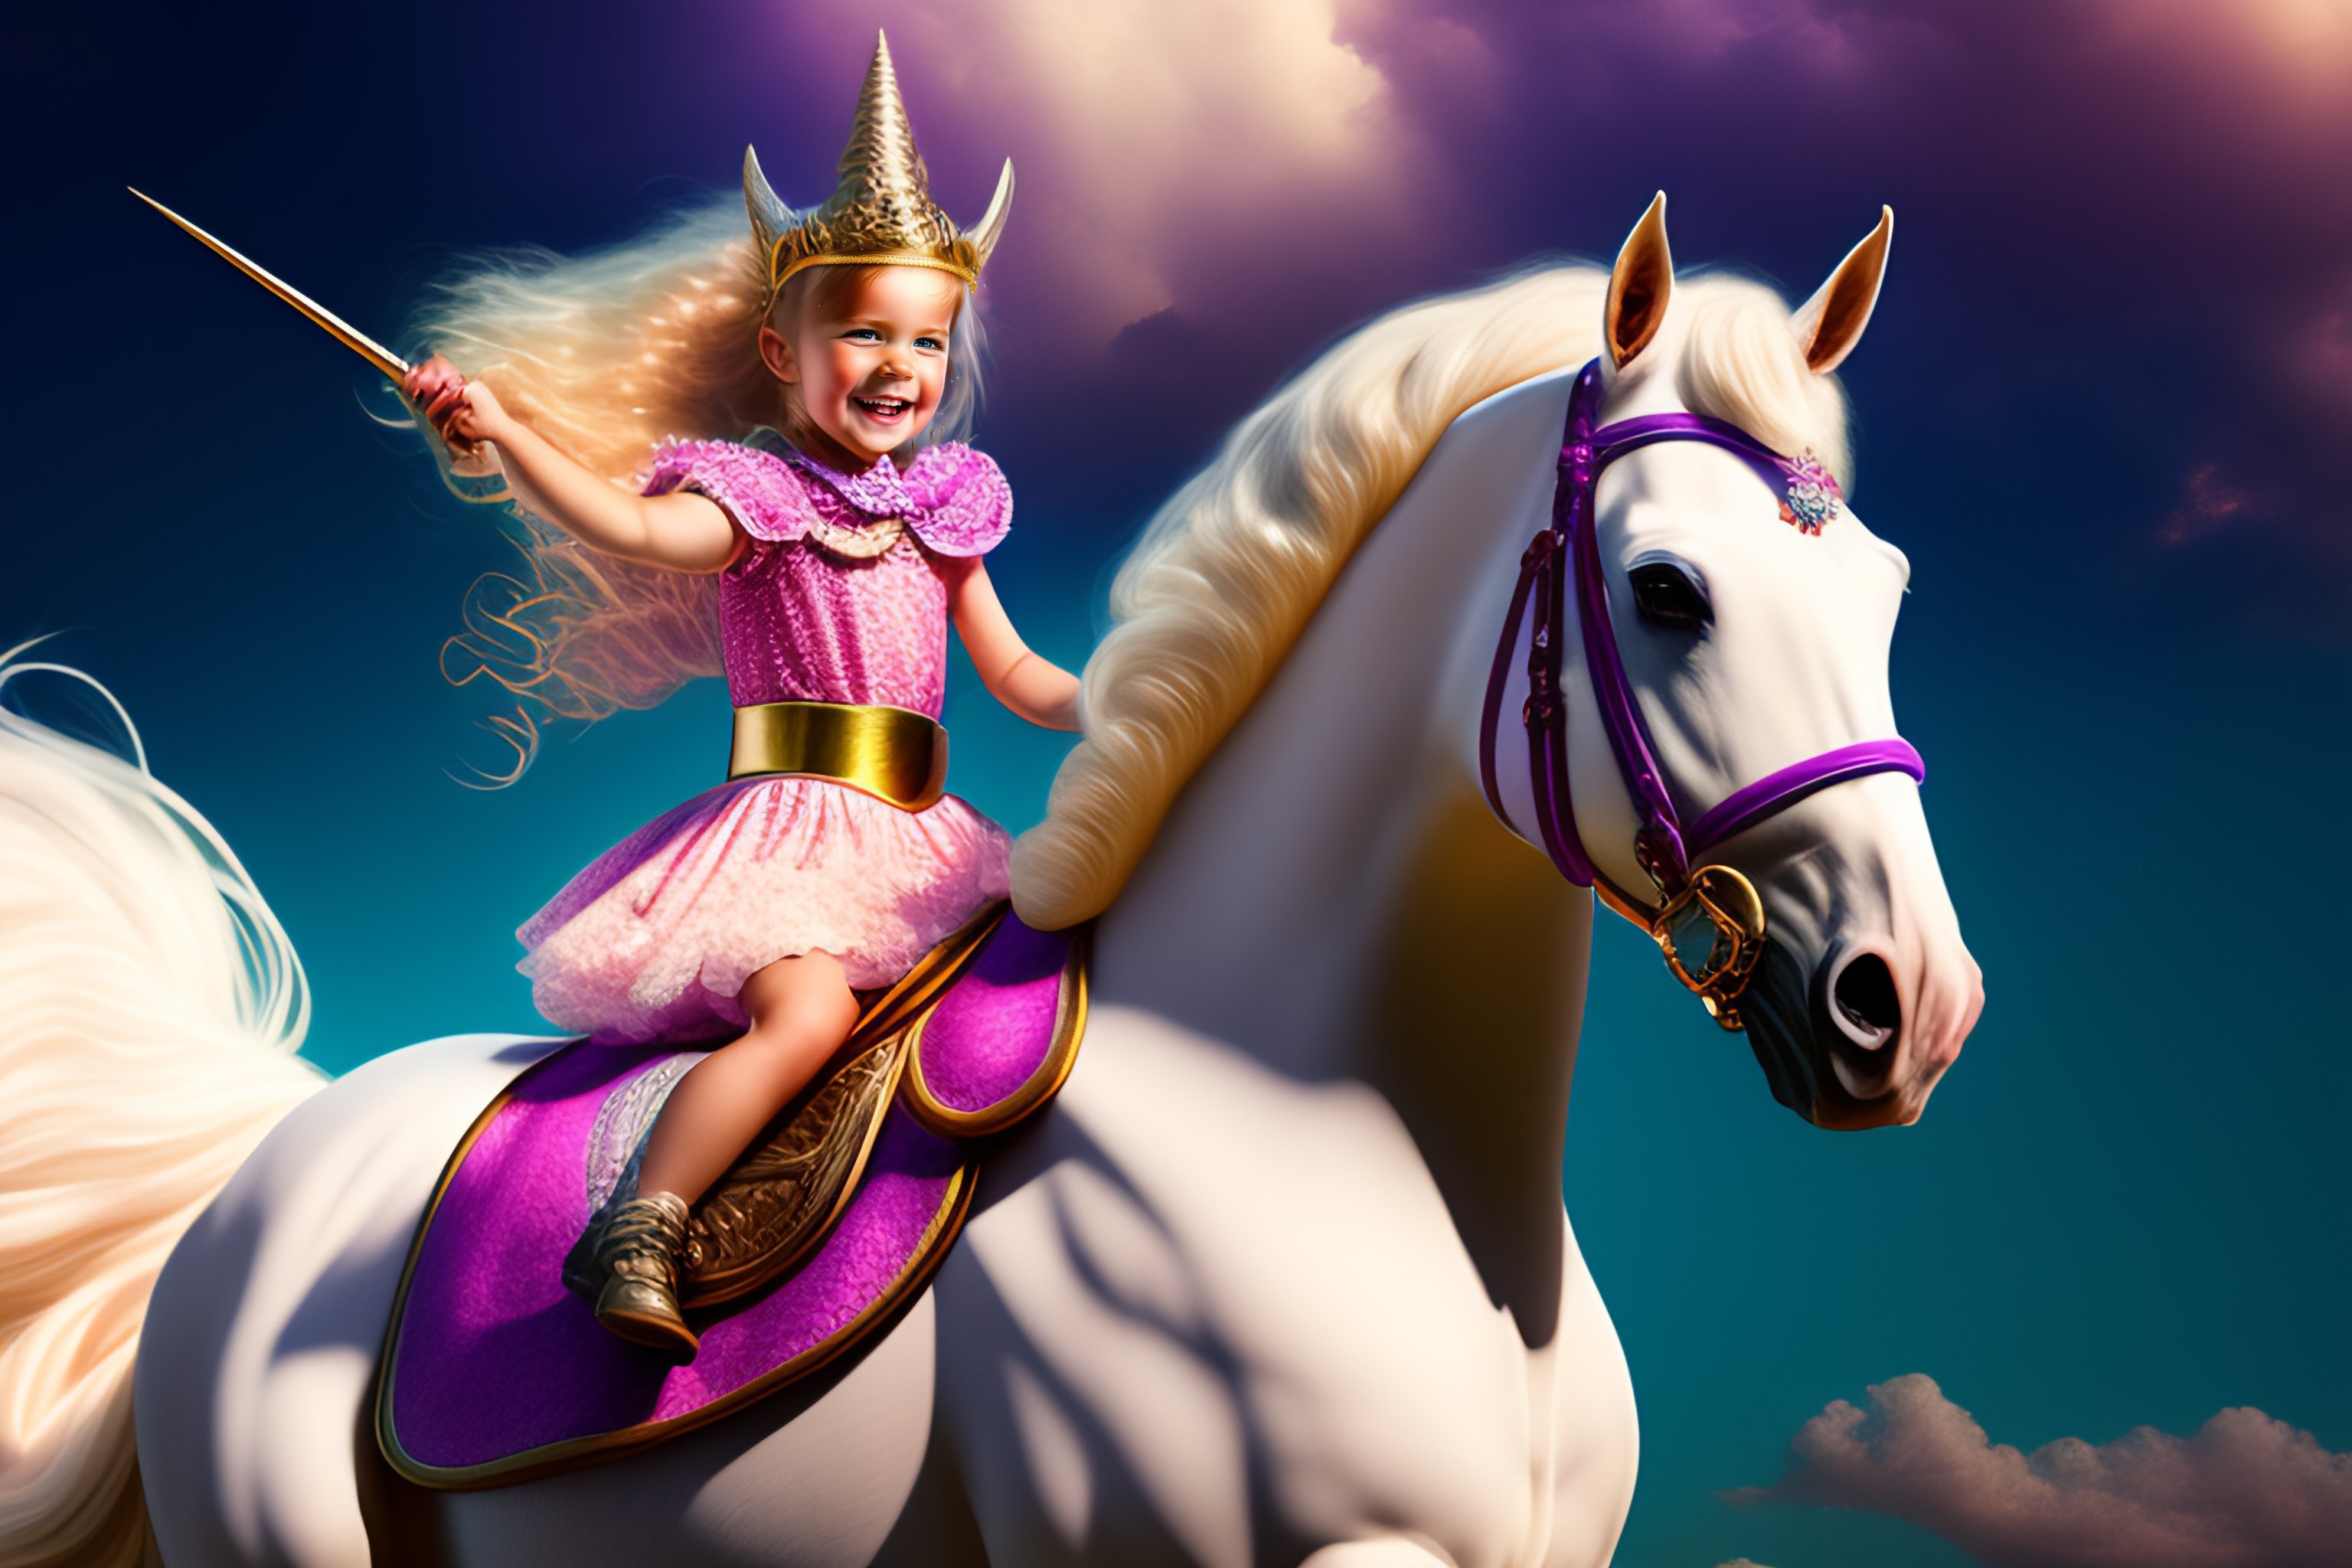 The unicorn and the princess photo shoot